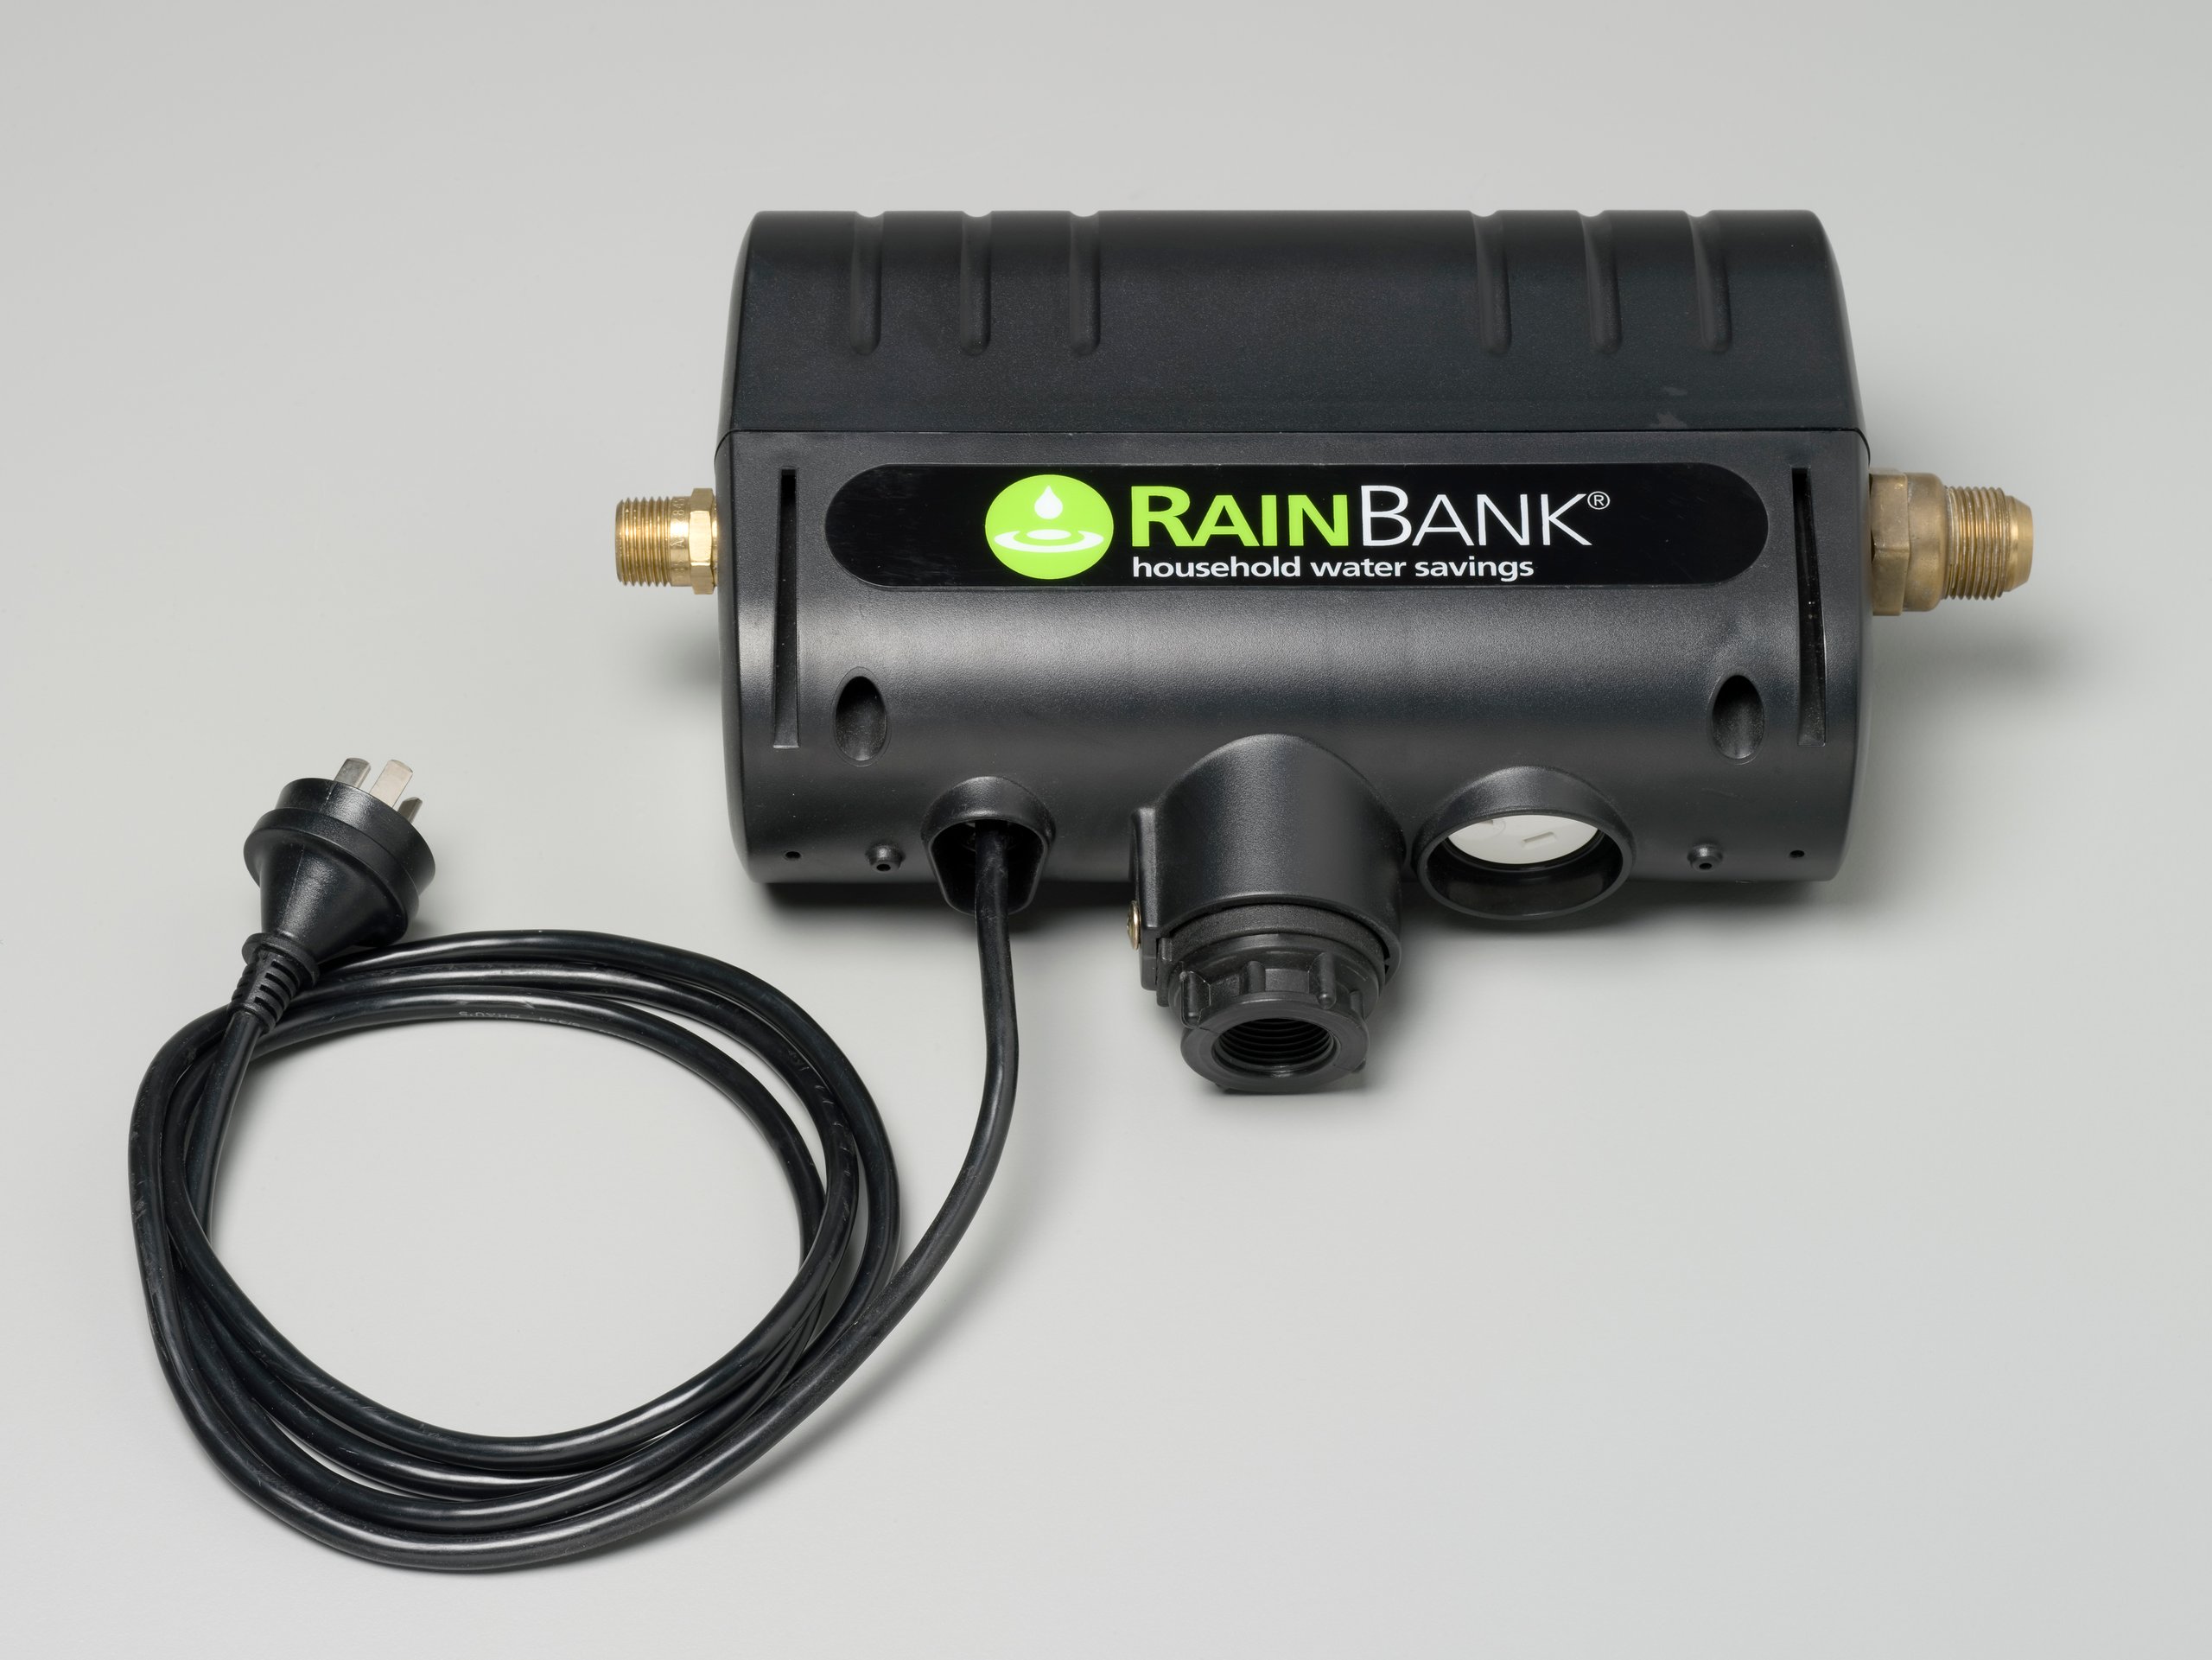 'Rainbank' pump controller